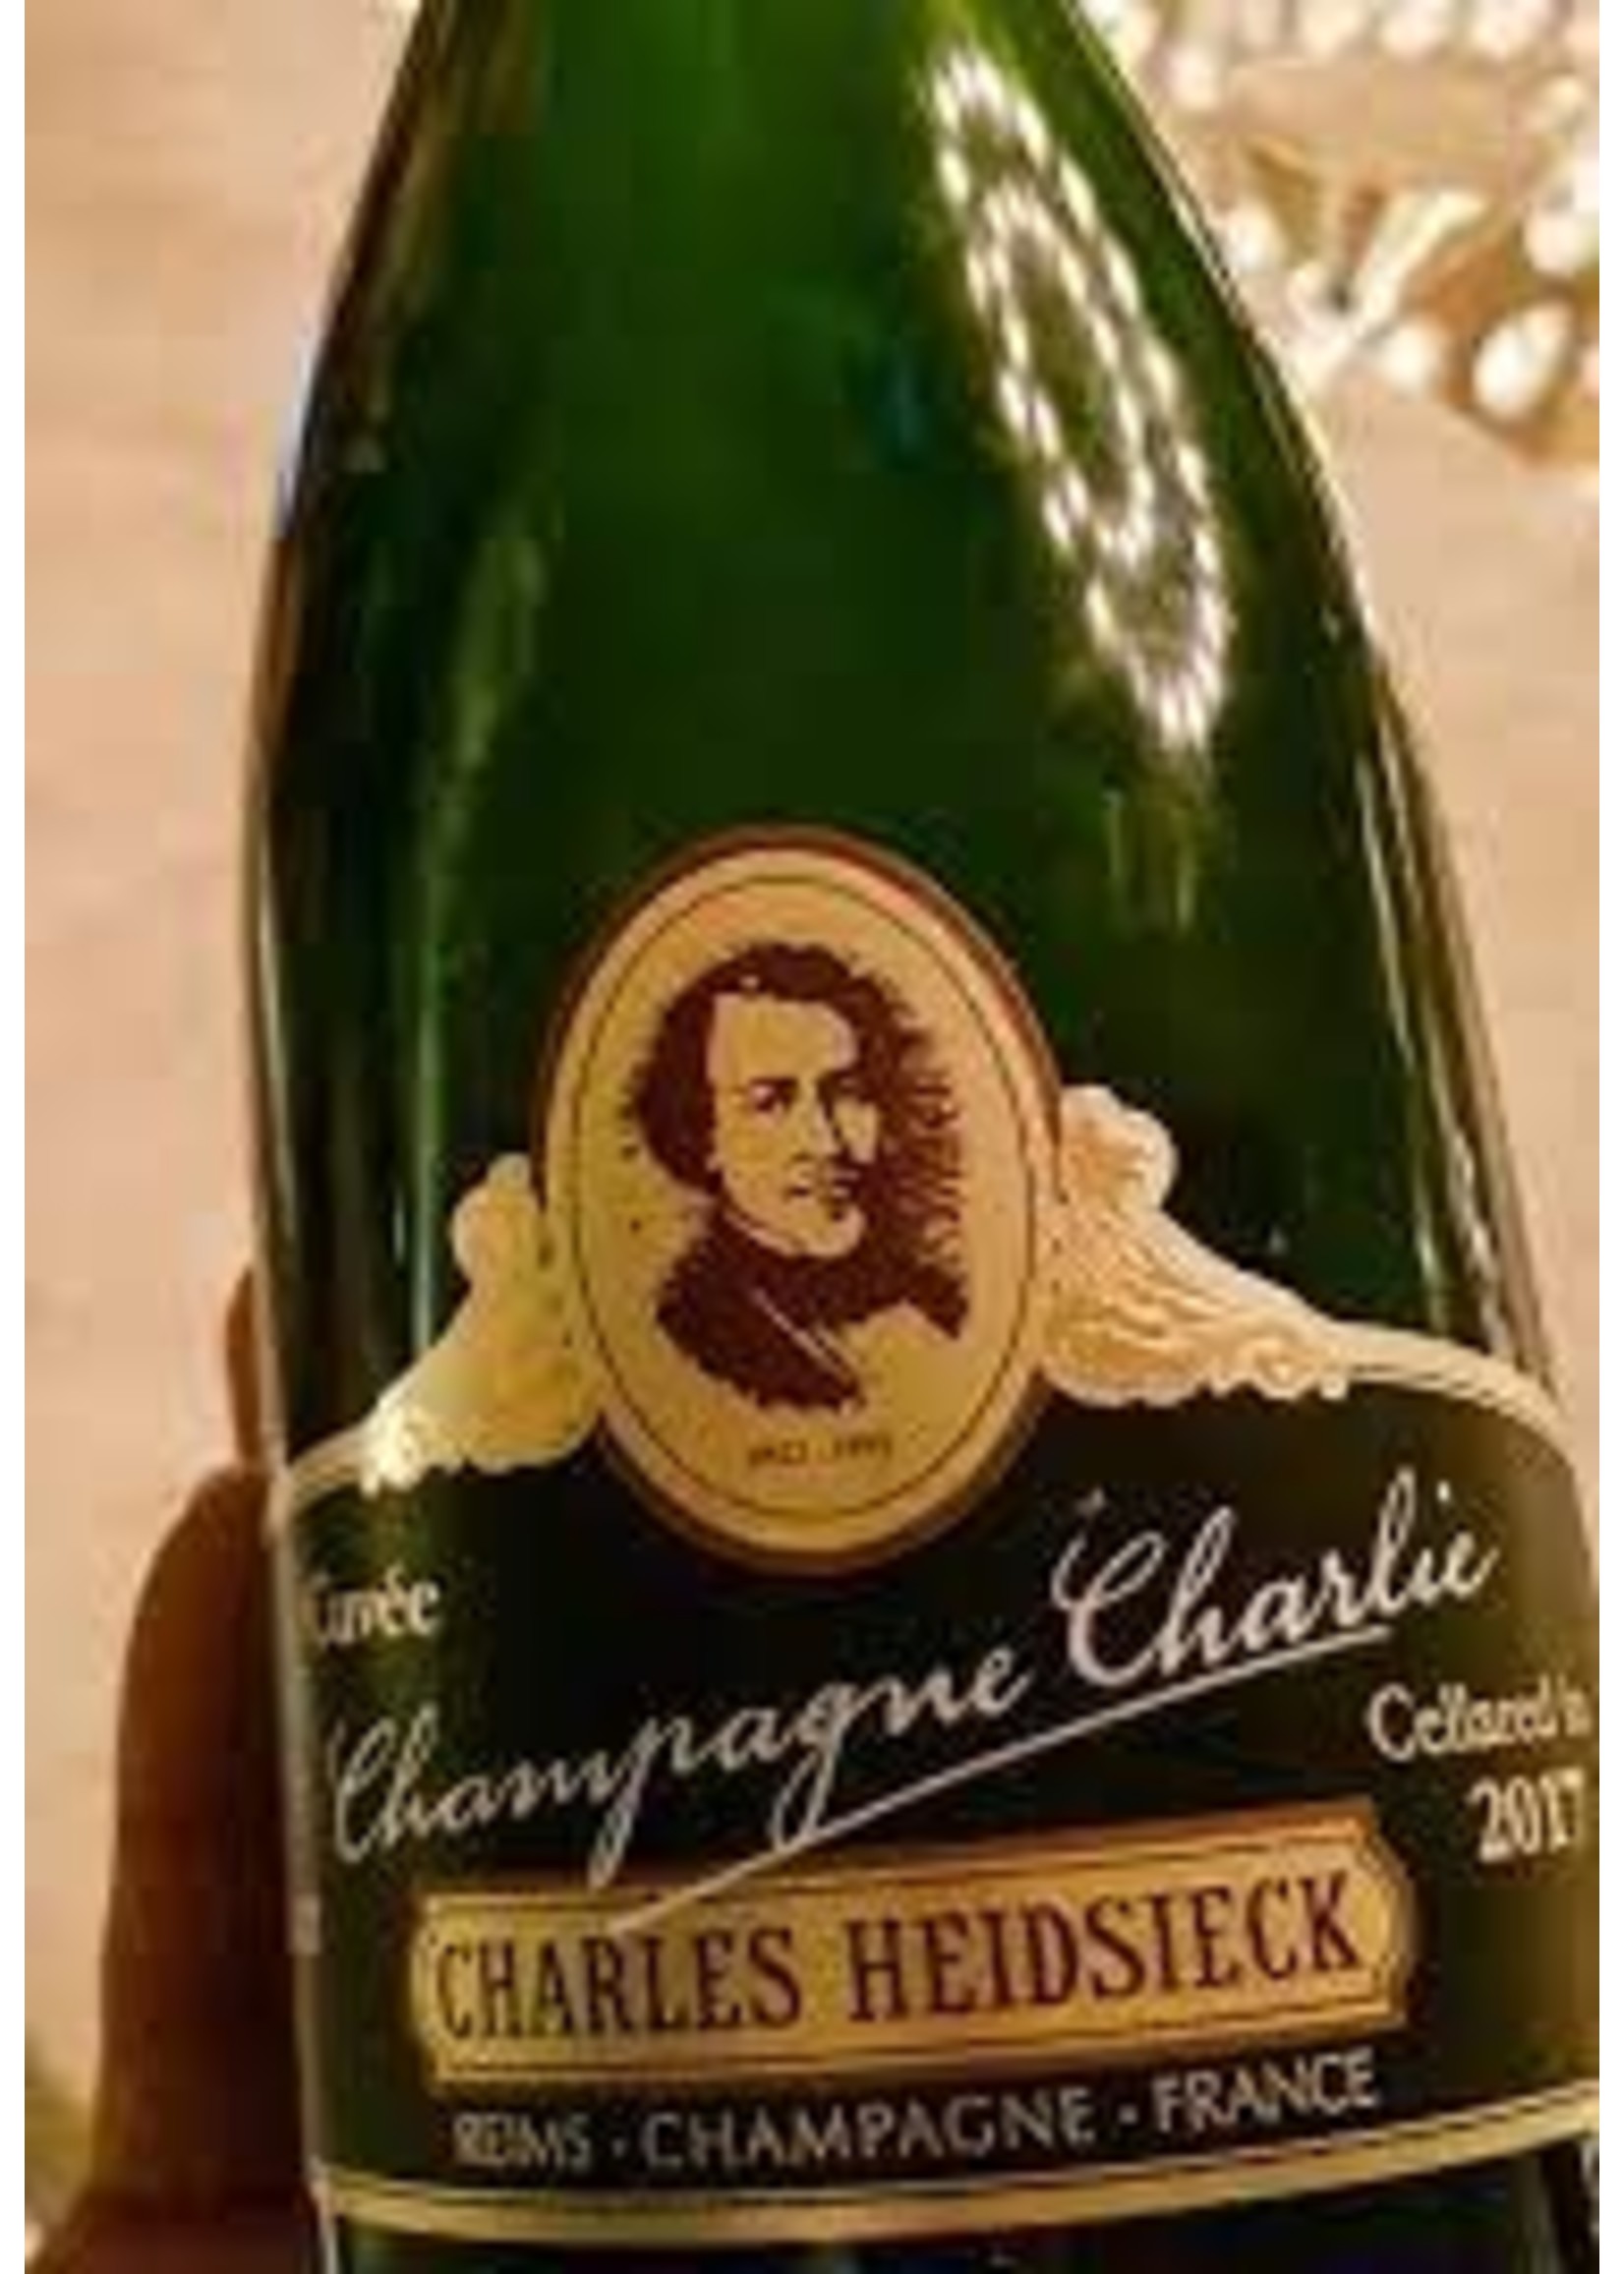 Charles Heidsieck 'Cuvee Champagne Charlie' Brut Cellared in 2017 750ml